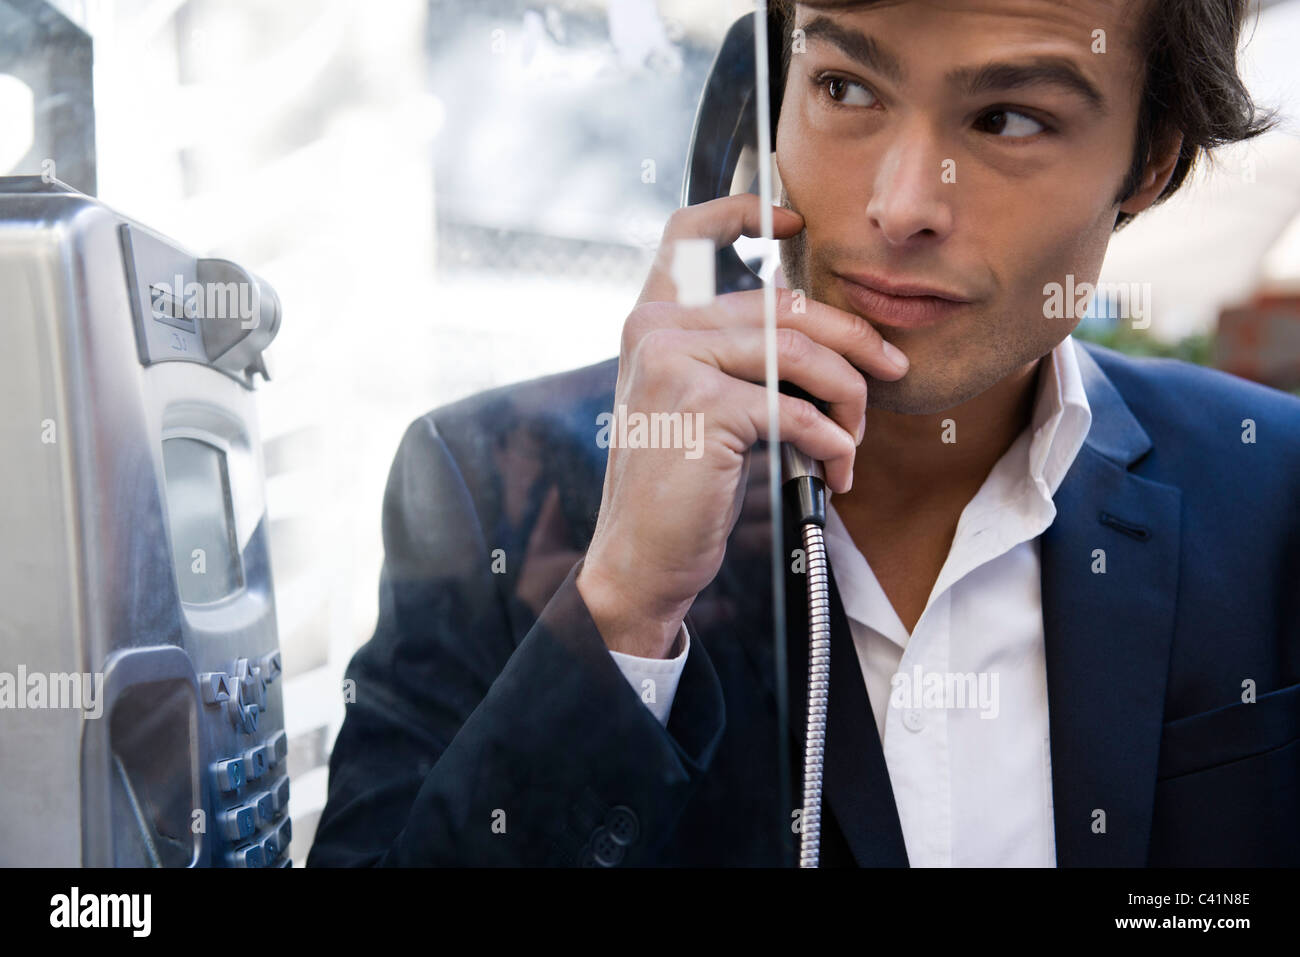 Man using pay phone Stock Photo